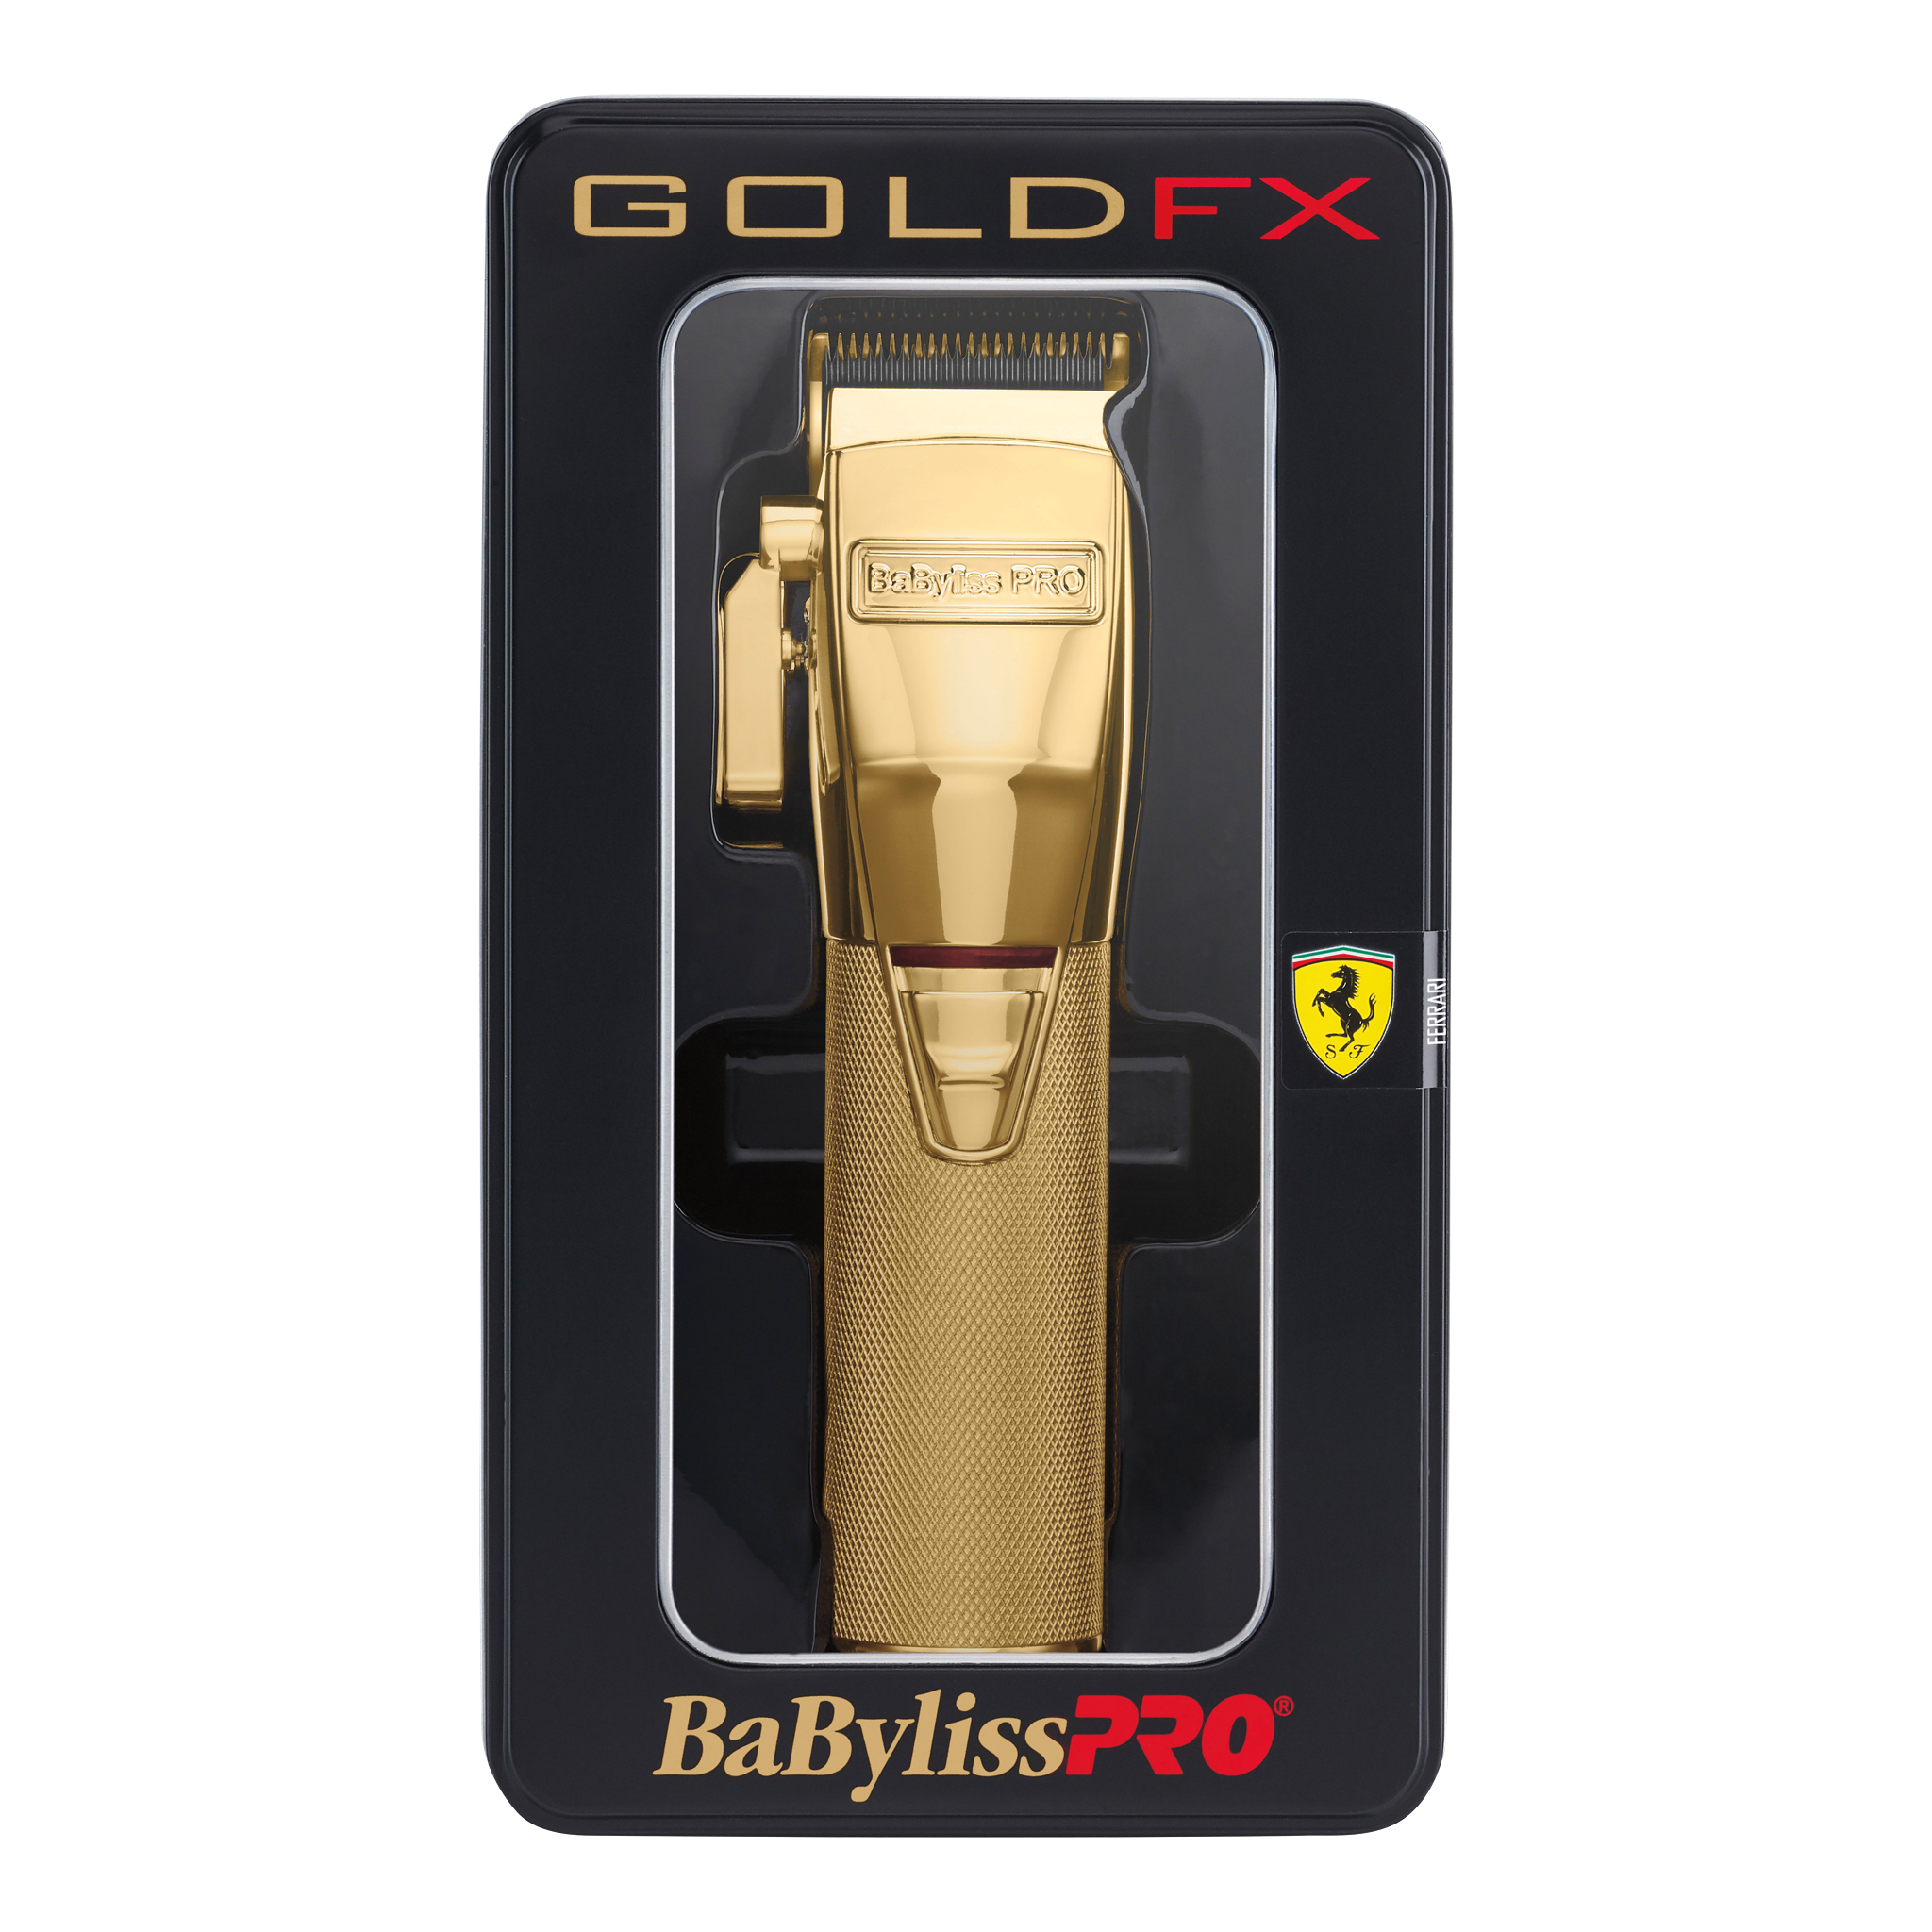 BaBylissPRO GoldFX Lithium Hair Clipper